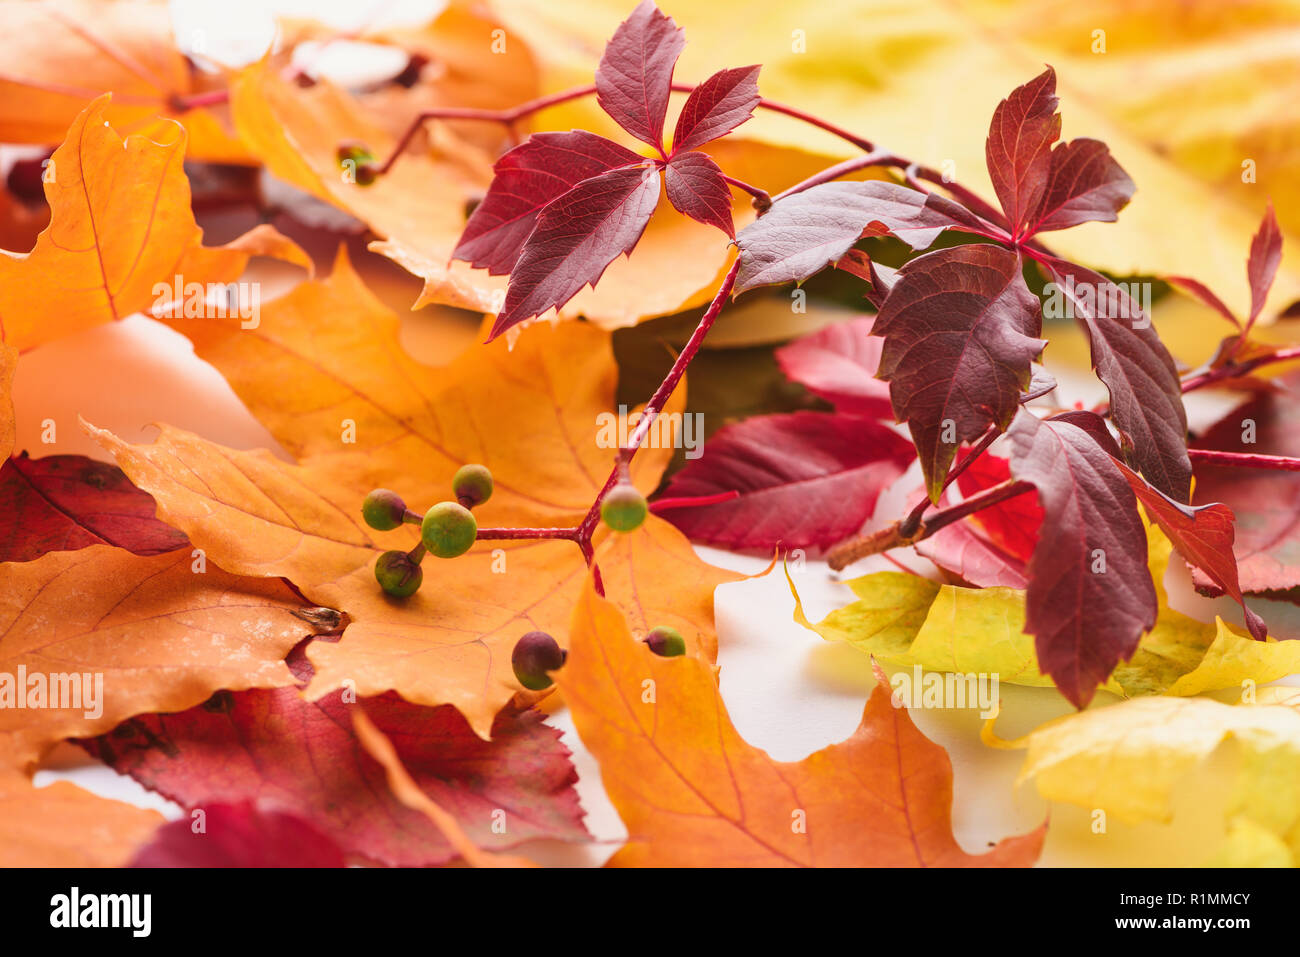 autumn burgundy leaves and orange maple leaves on white surface Stock Photo